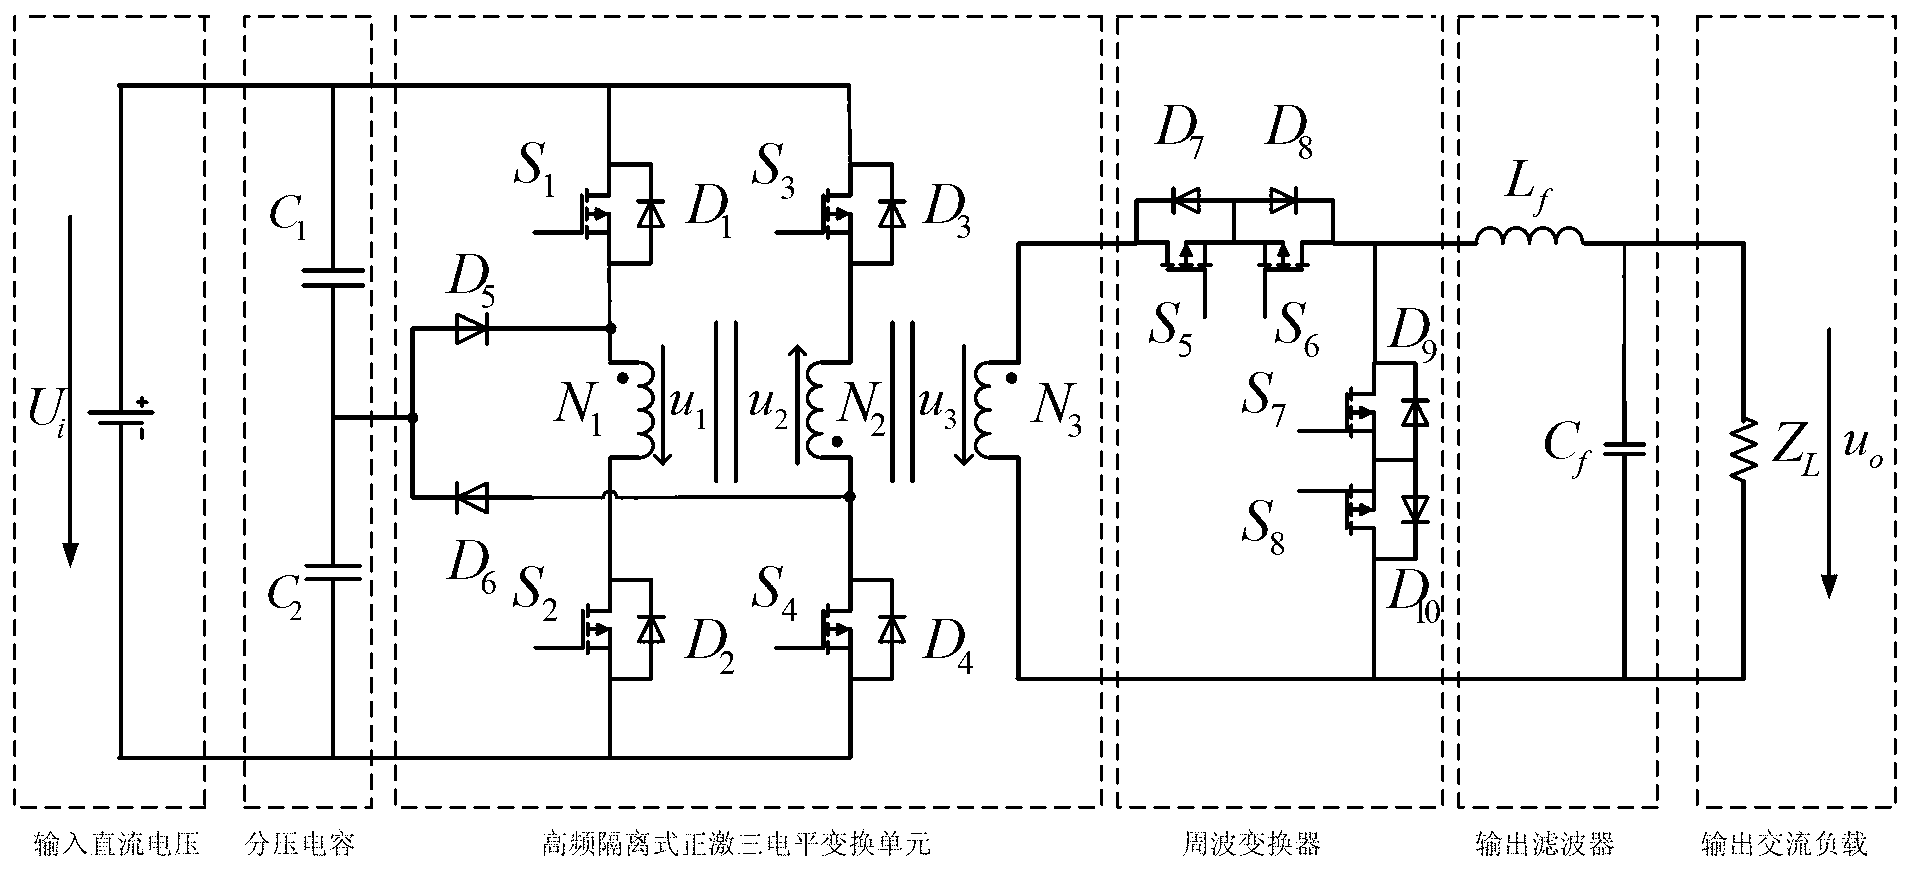 High-frequency isolation type tri-level inverter based on forward converter